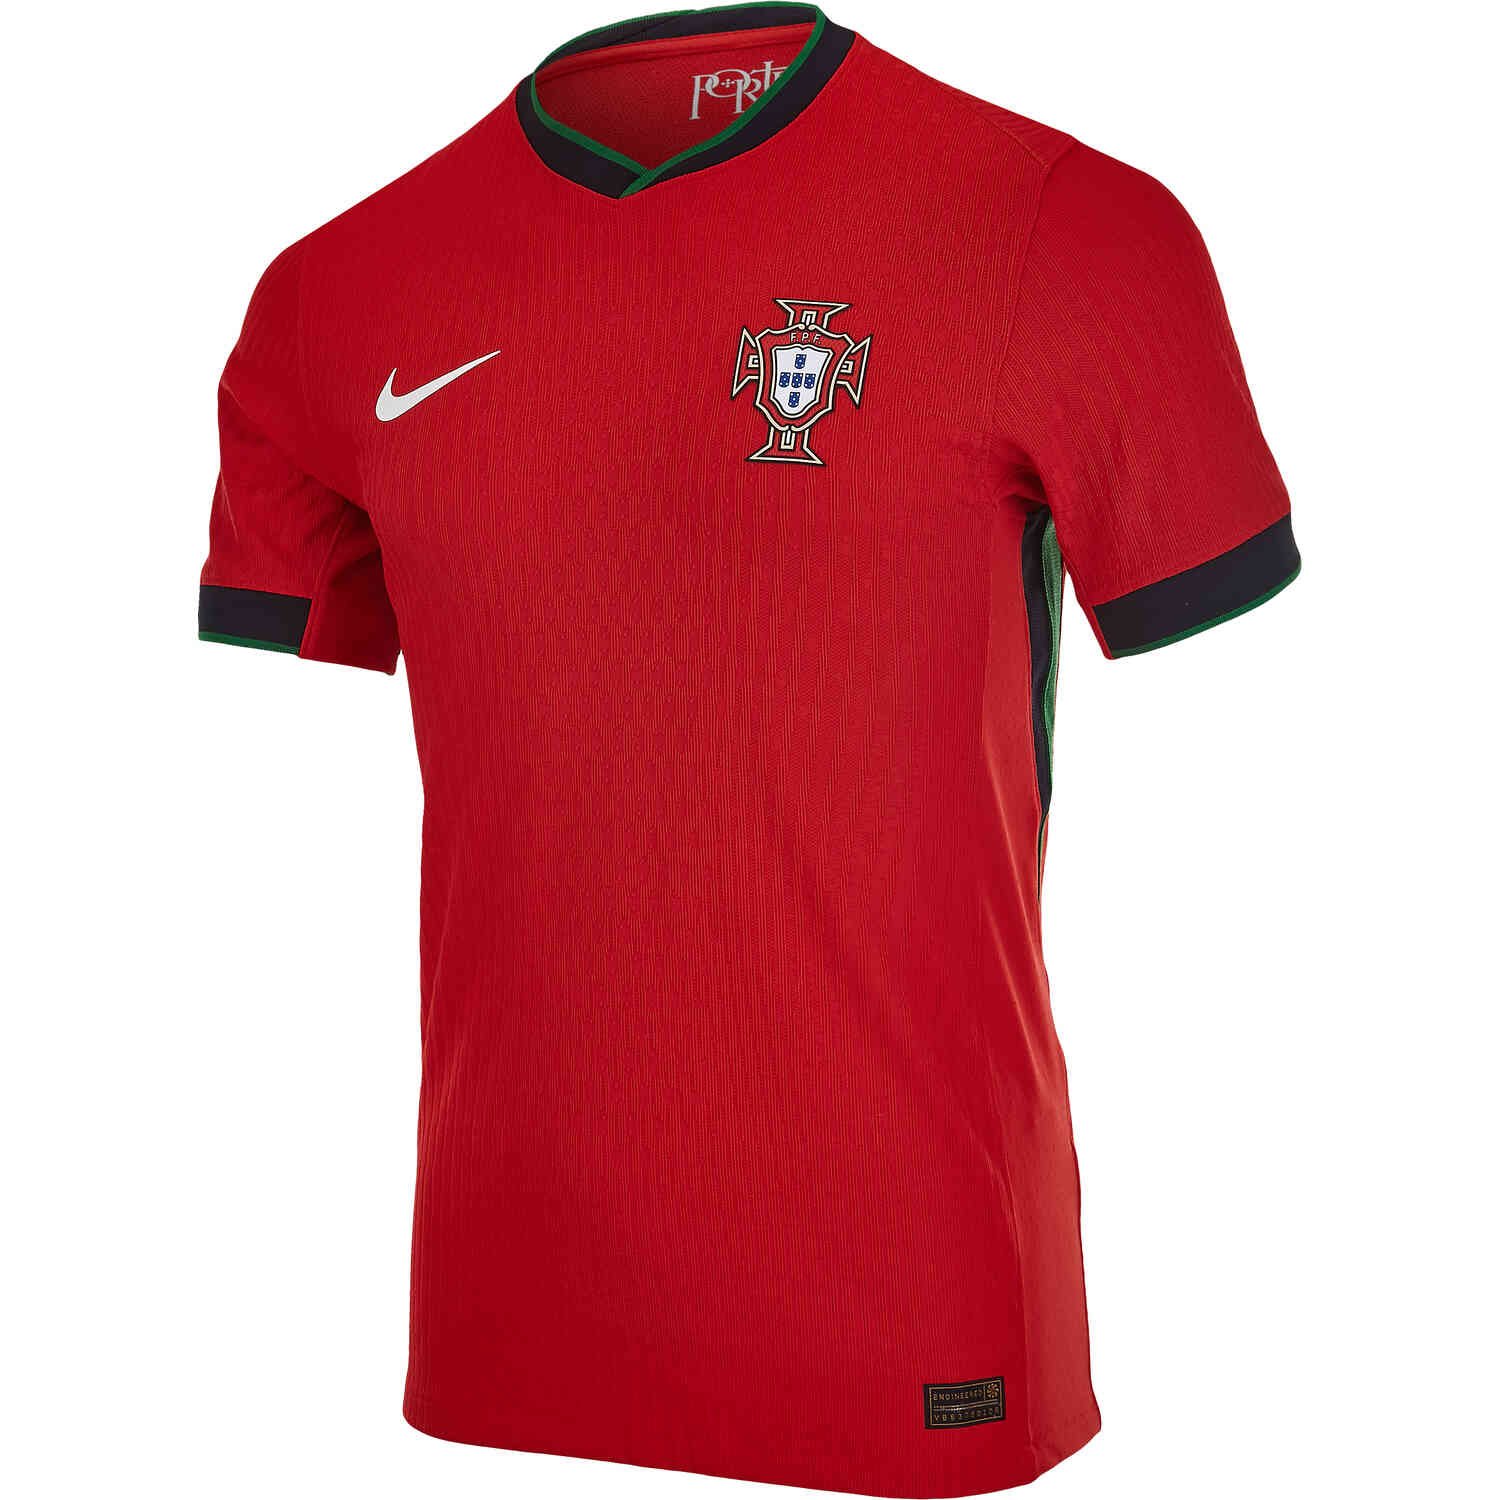 2024 Nike Portugal Home Match Jersey - SoccerPro